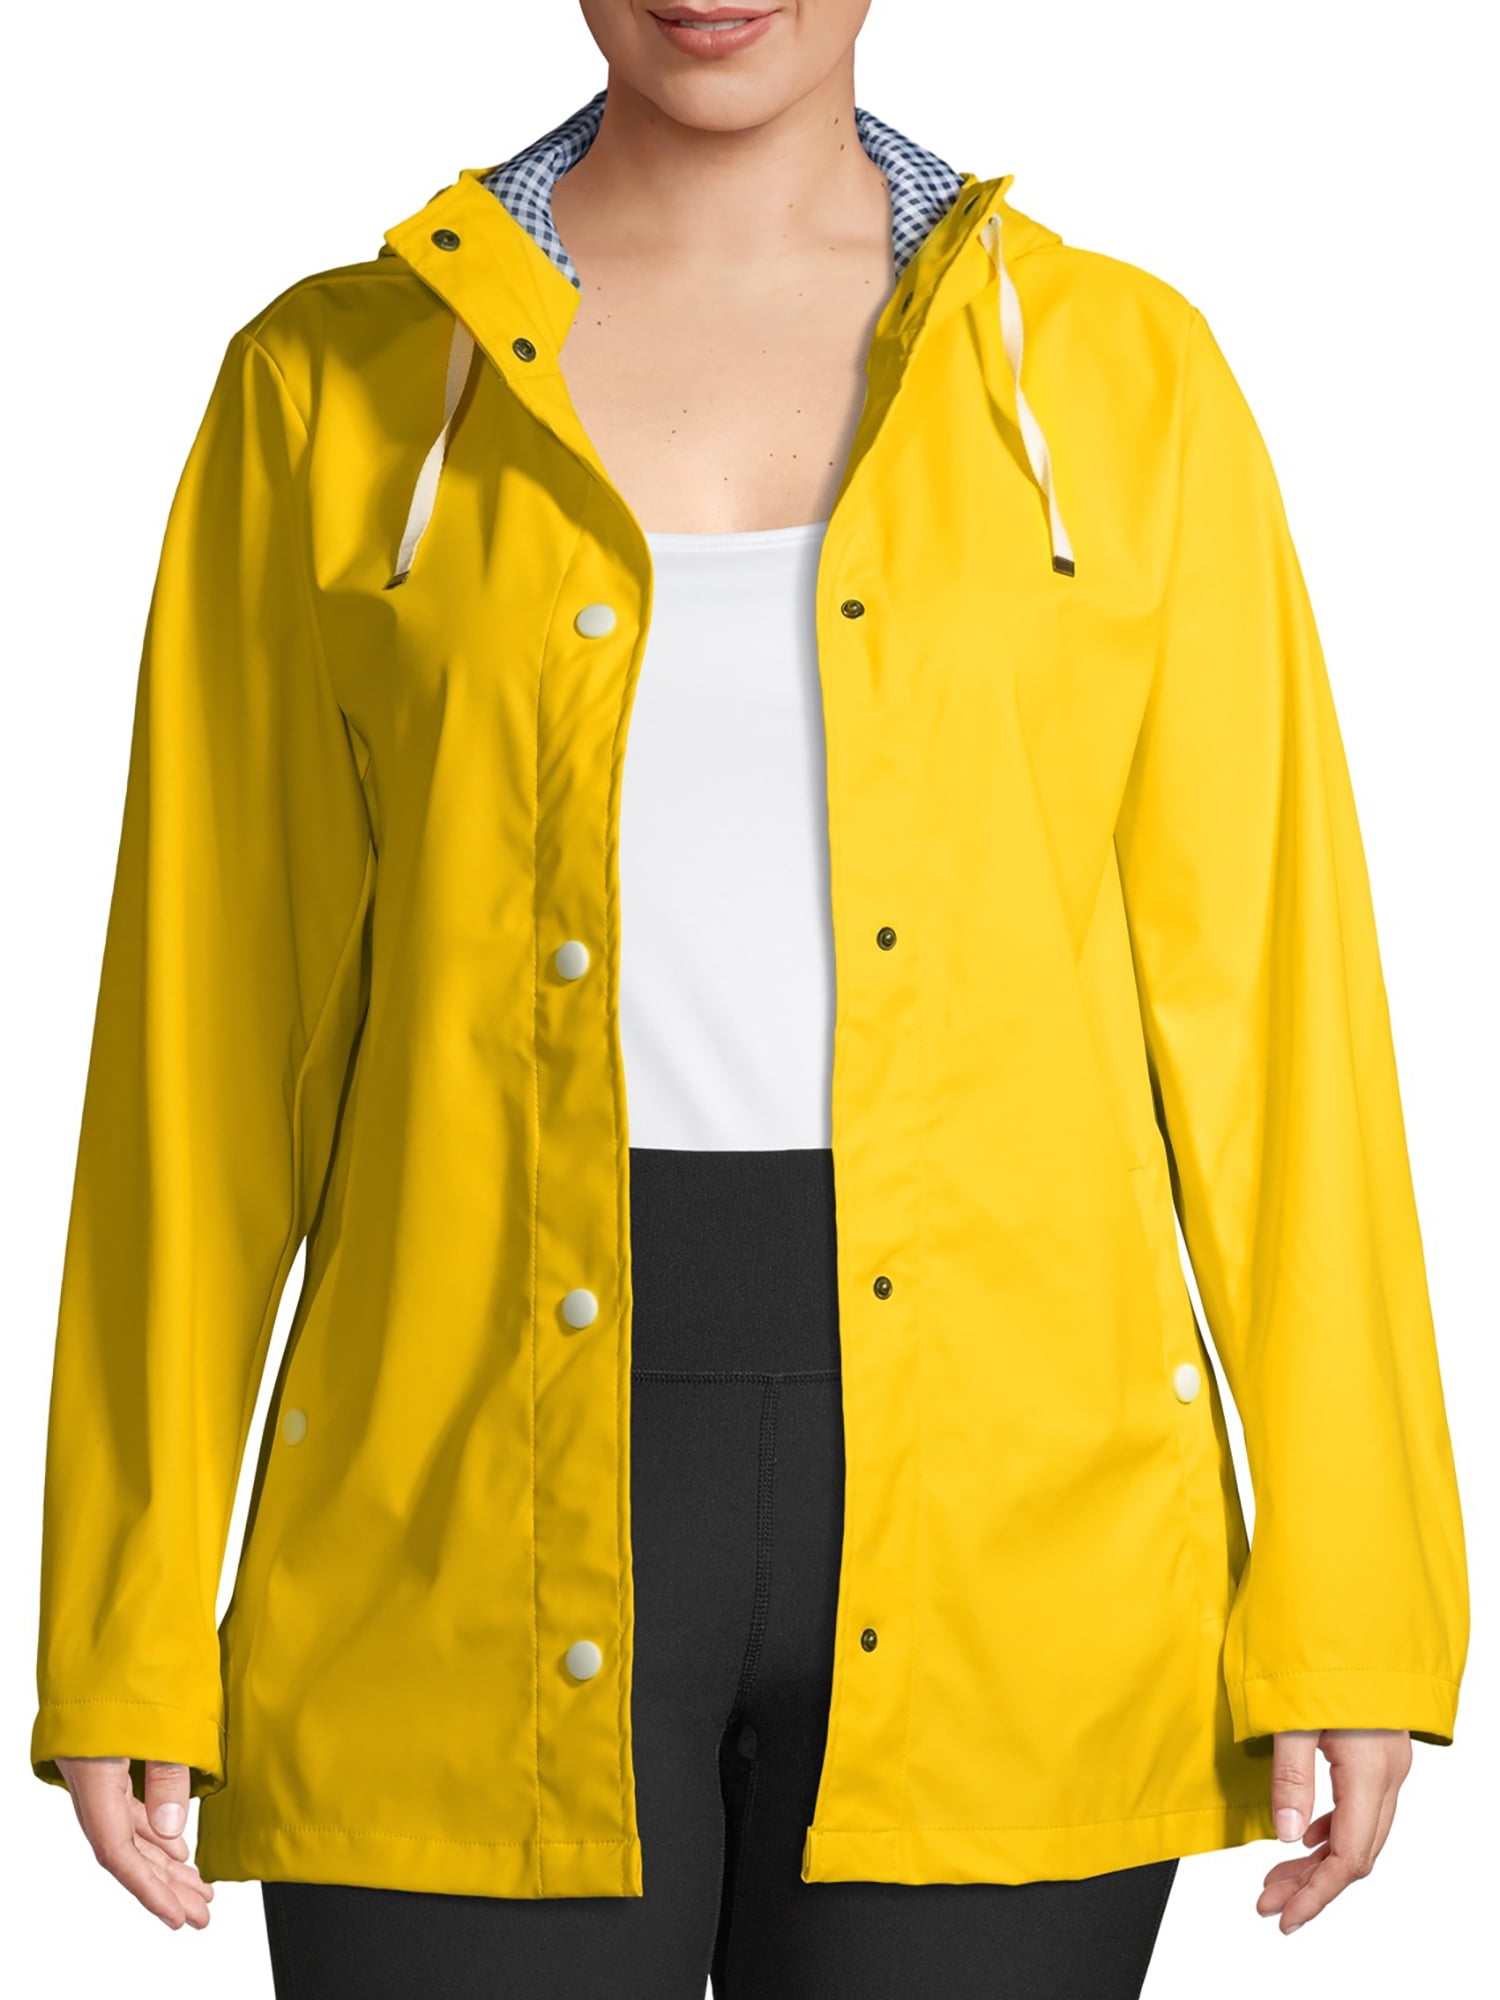 Big Chill Women's Plus Size Slicker Rain Coat - Walmart.com